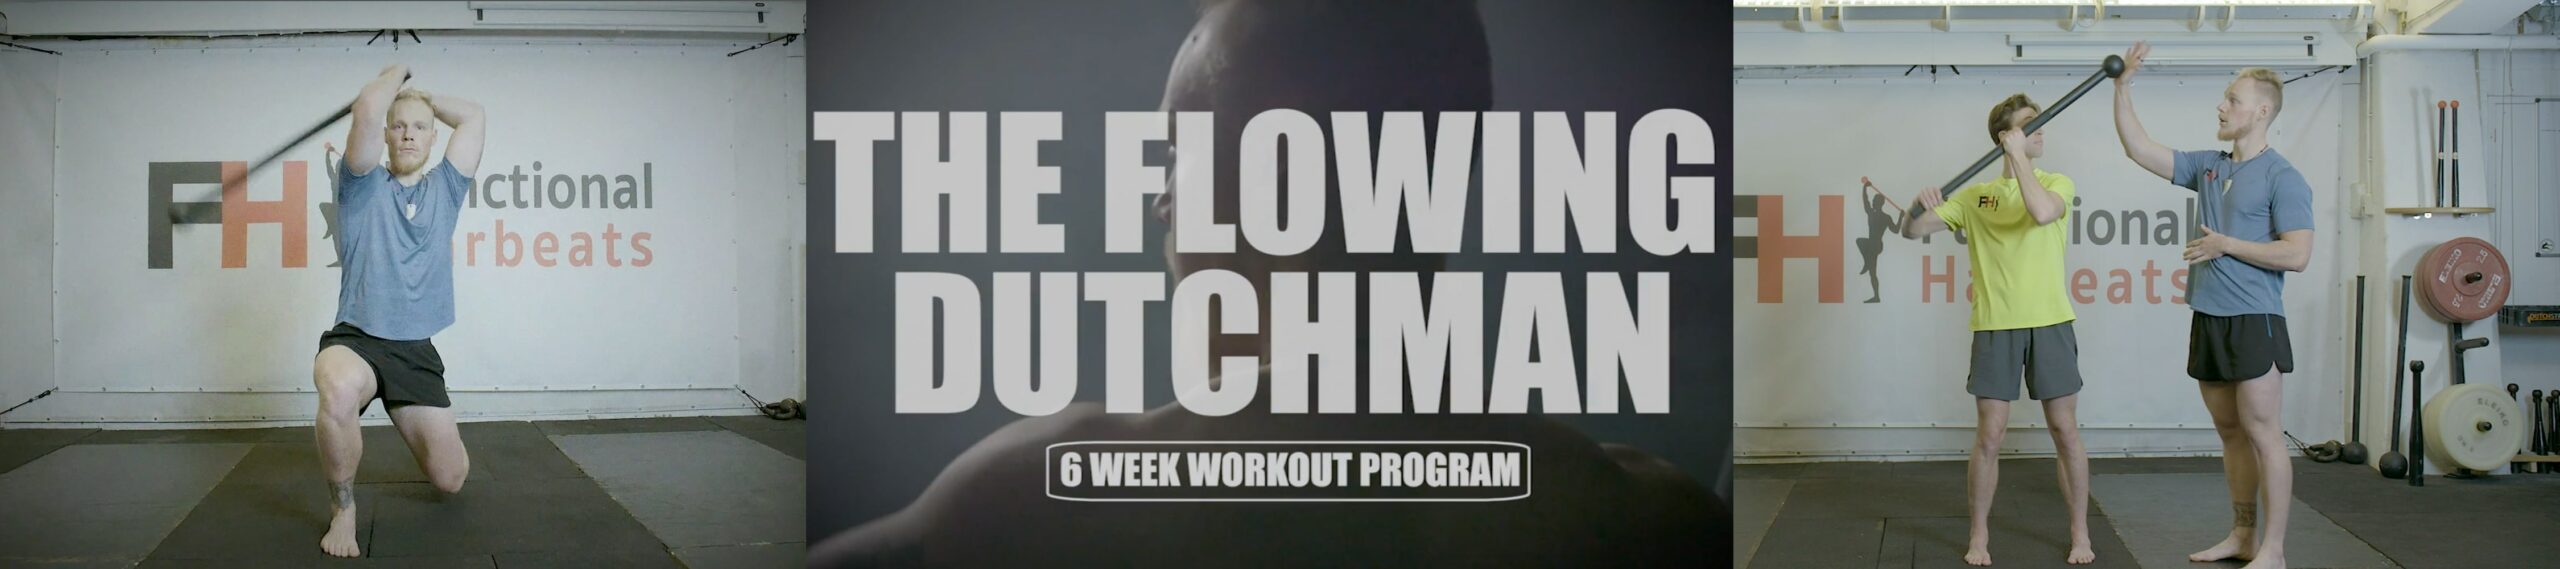 The Flowing Dutchman 6 Week Workout Program